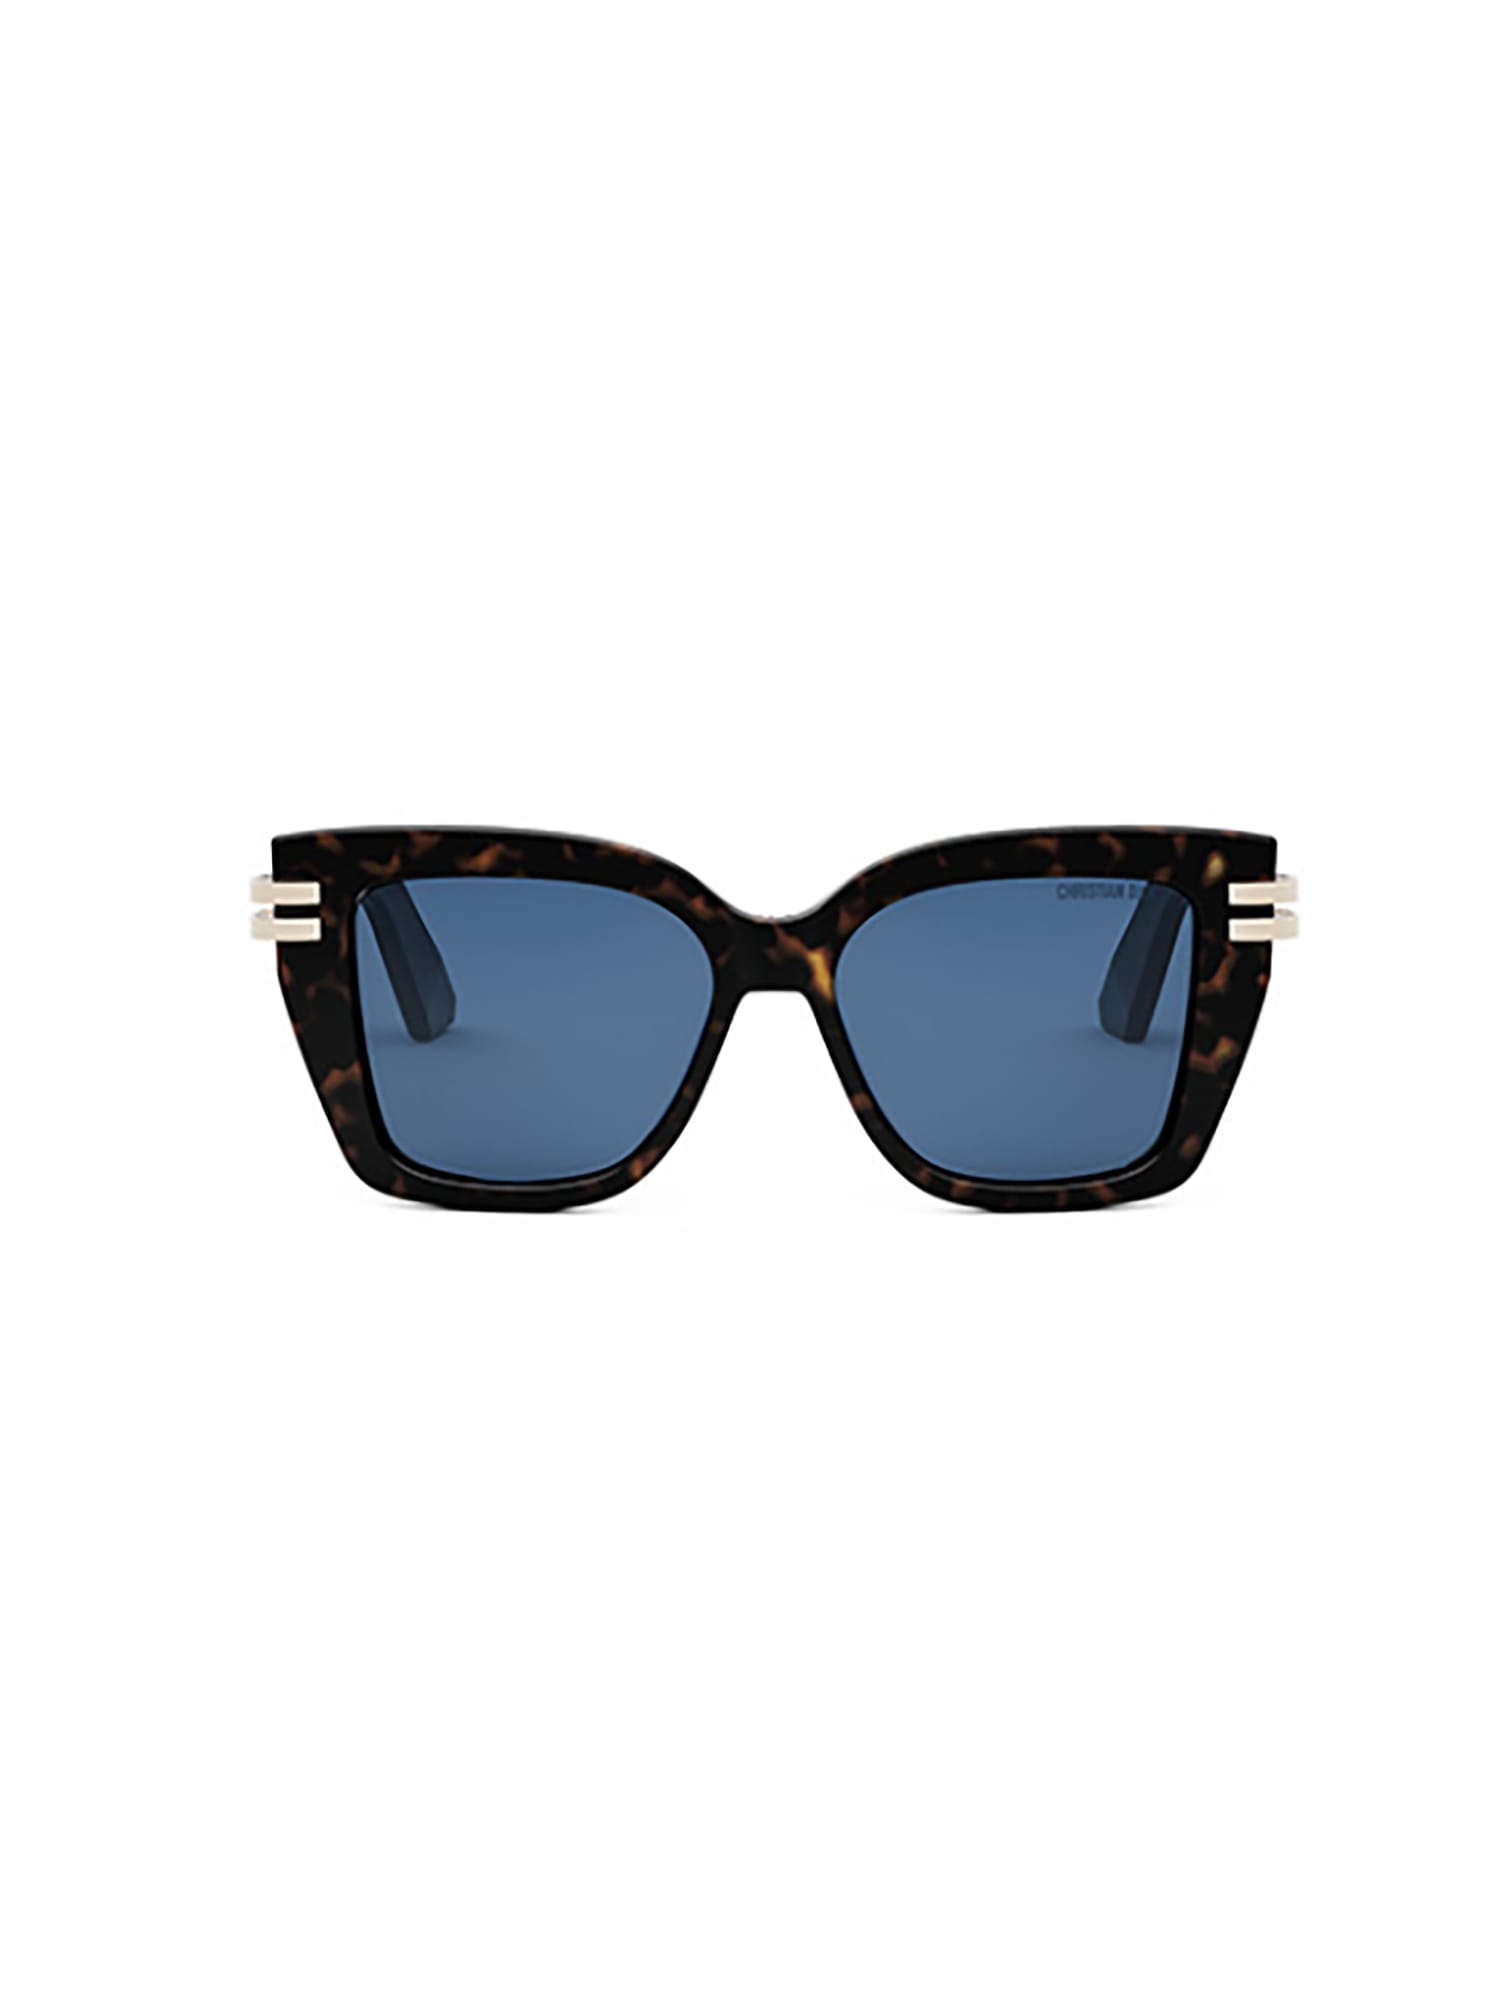 CDIOR S1I Sunglasses